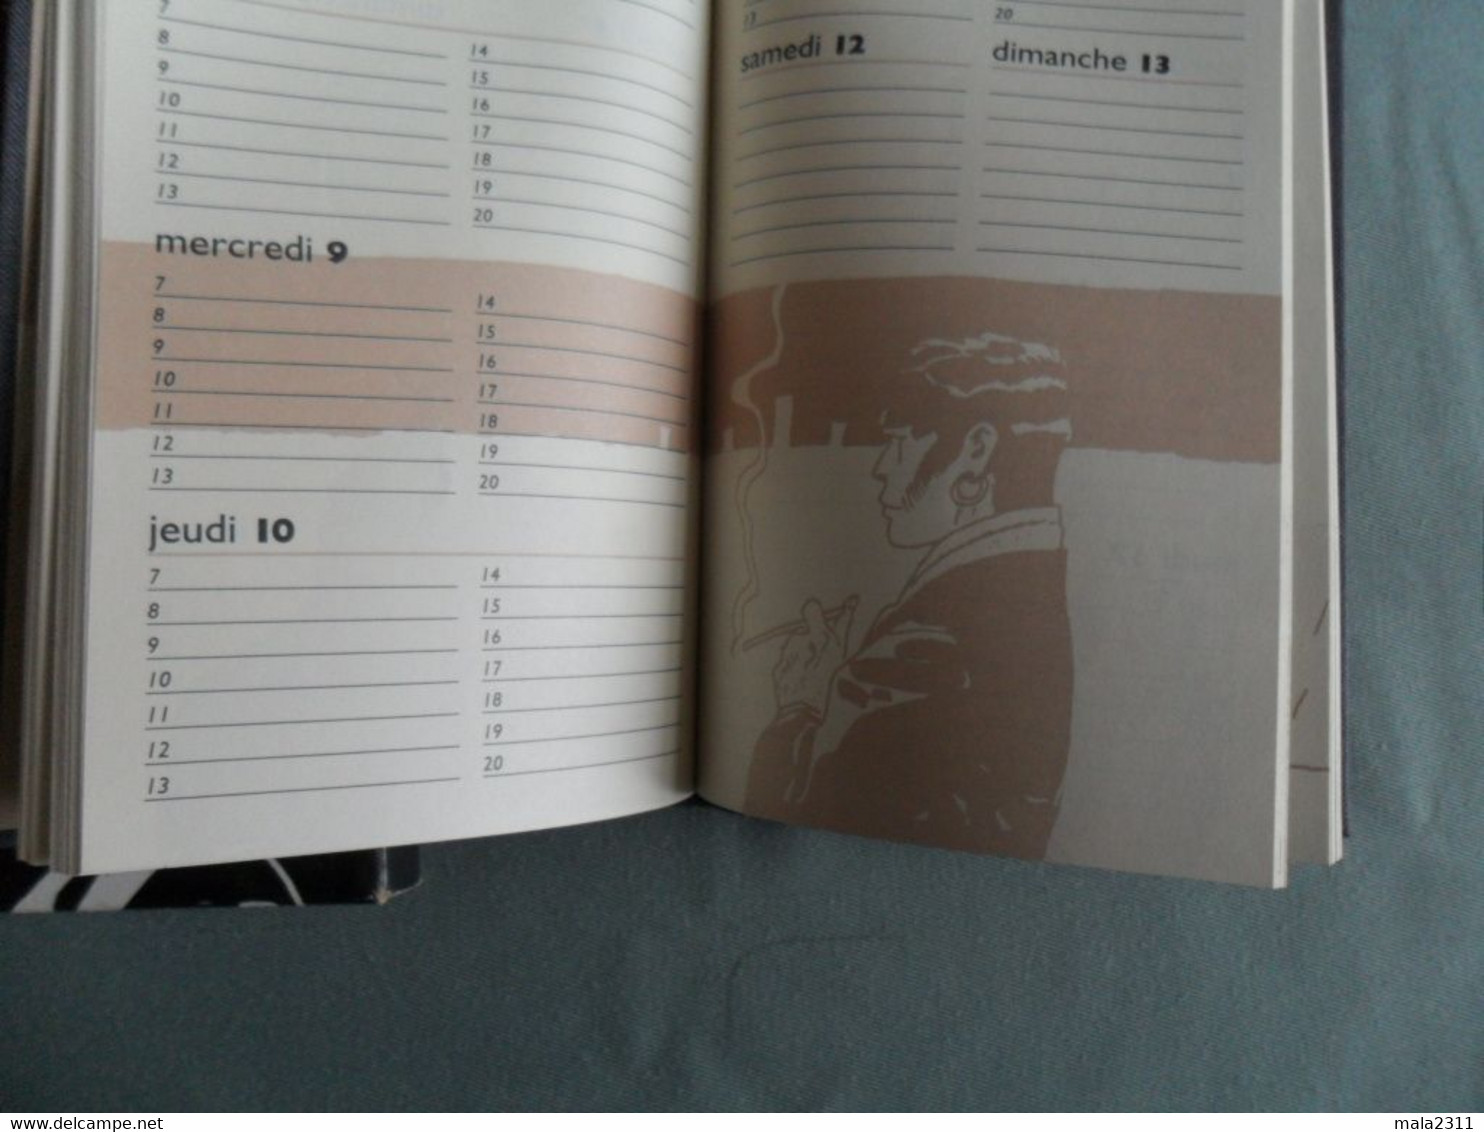 CORTO MALTESE - HUGO PRATT  /  Agenda 1992 Couverture Cartonnée / Dimension 9,5X16,5 Cm. / CASTERMAN - Agenda & Kalender